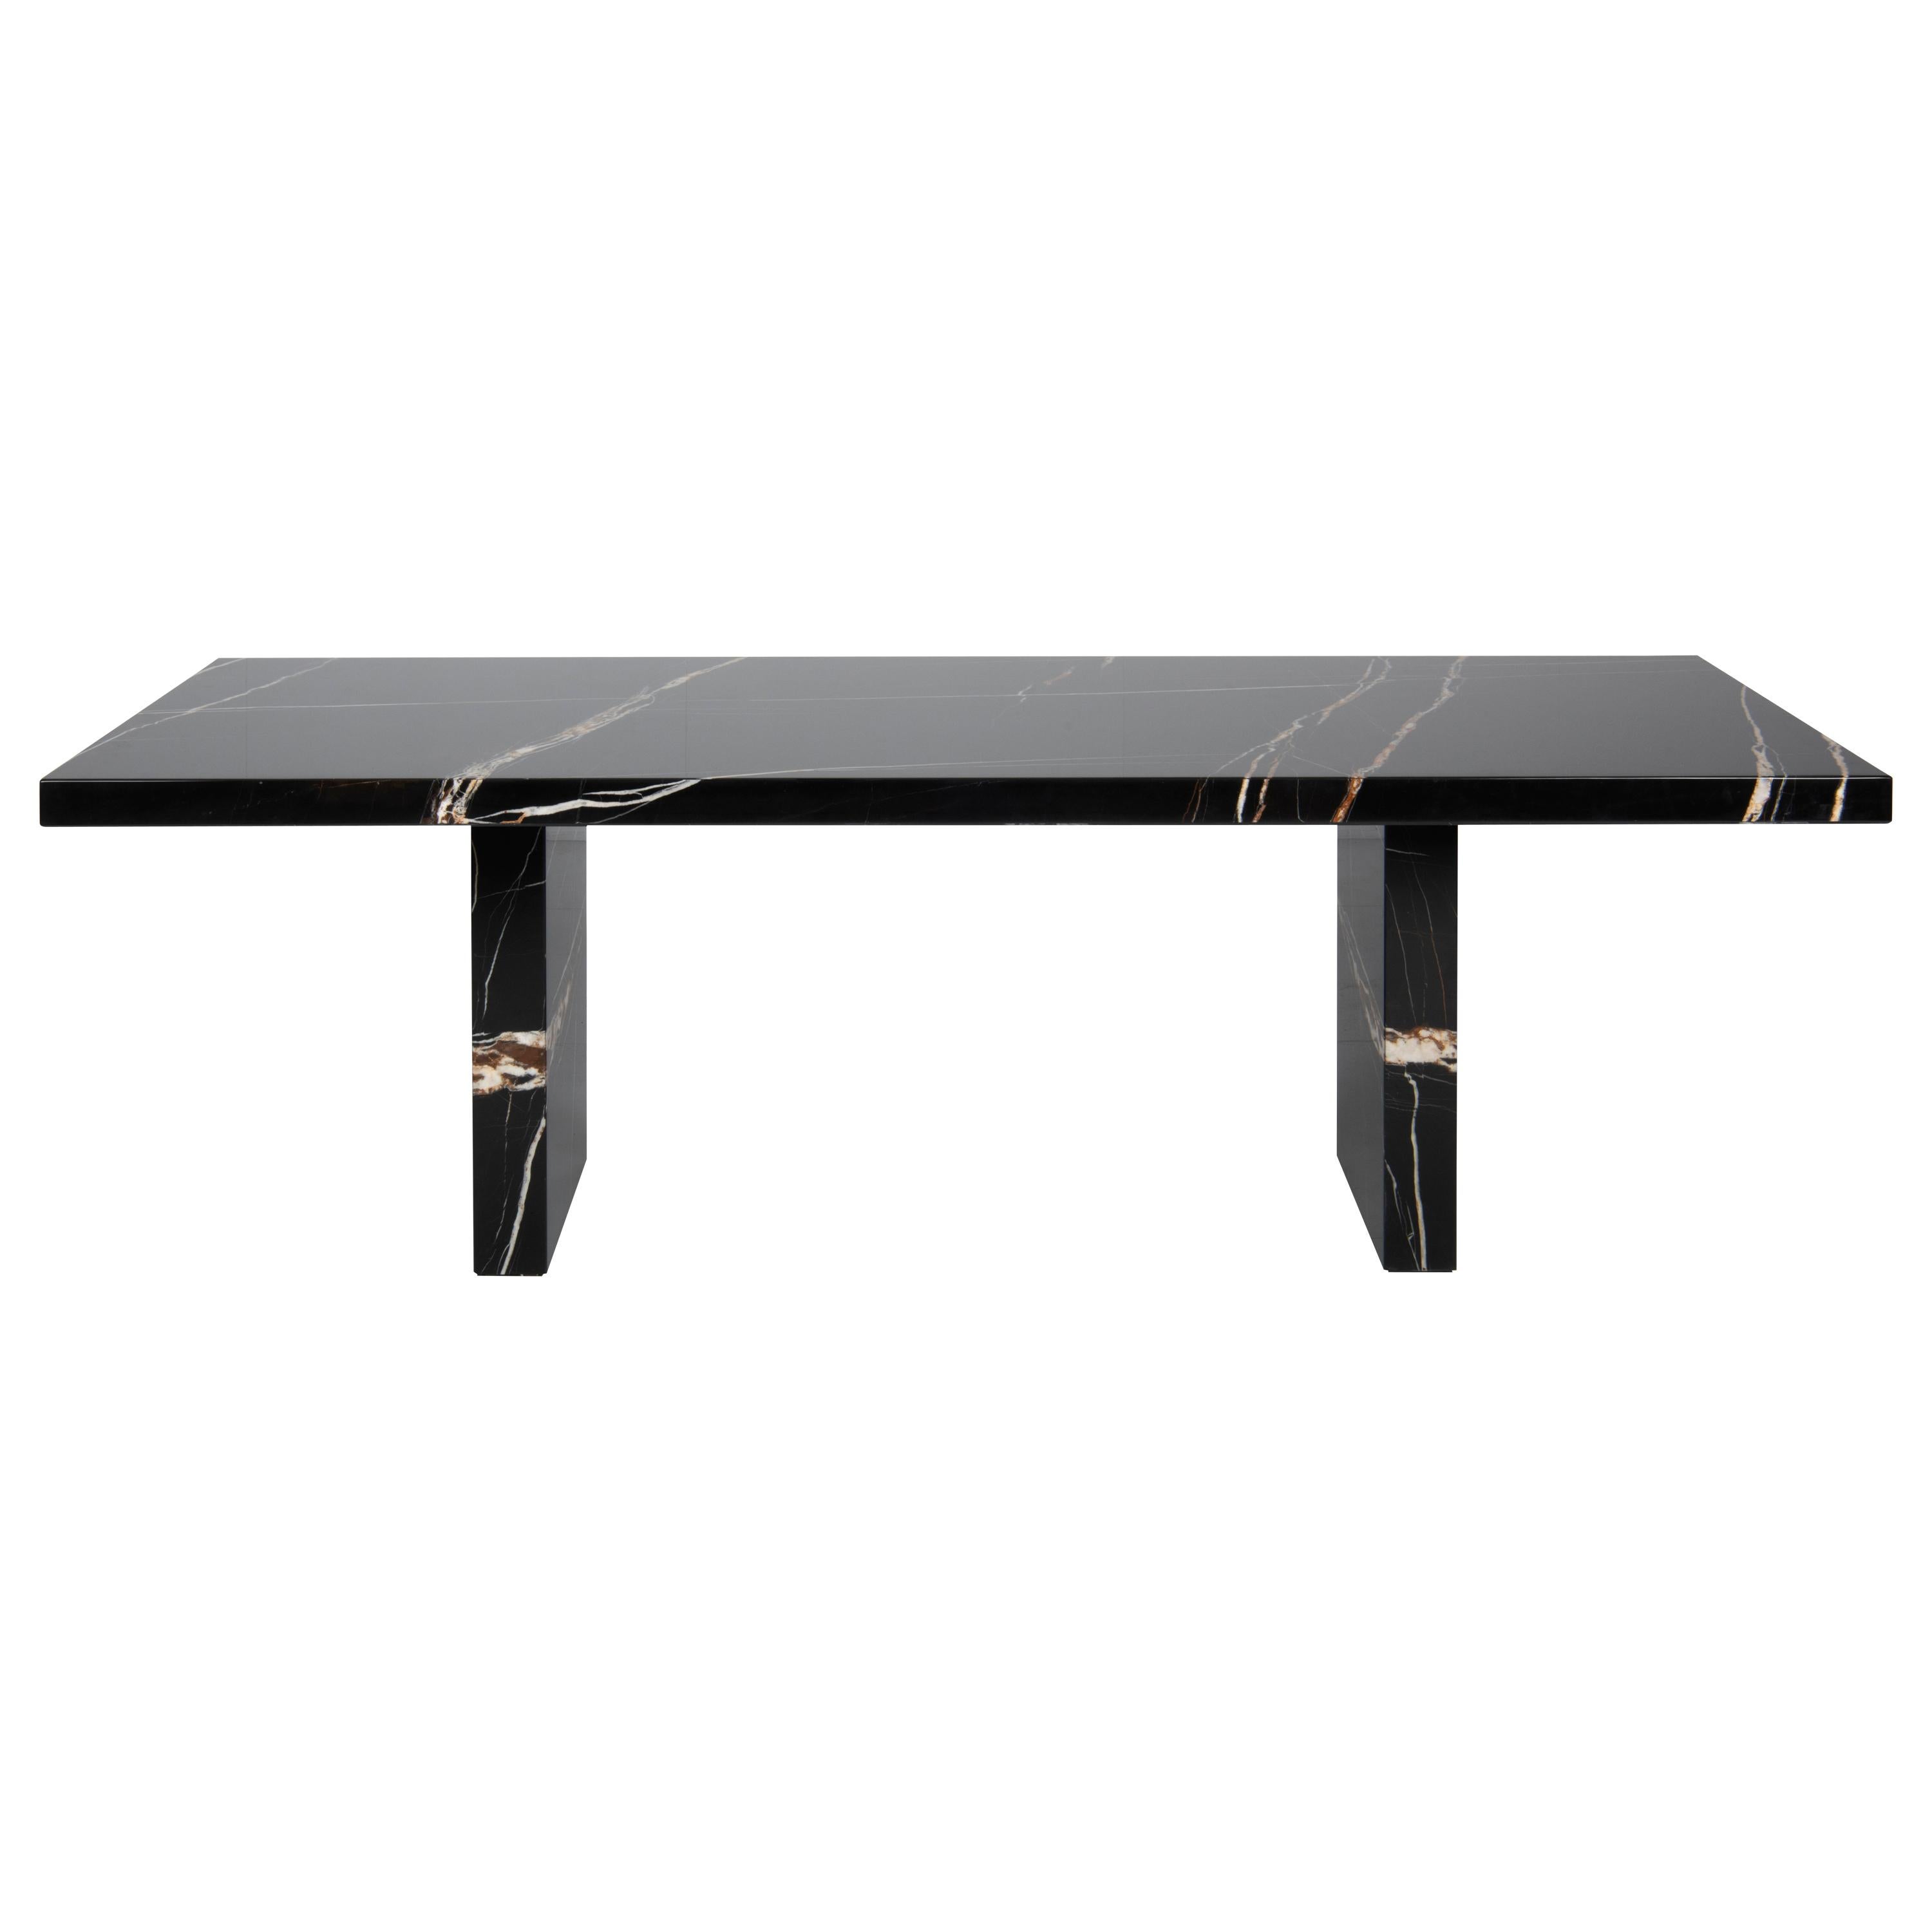 For Sale: Multi (STONE Sahara Noir) DS-788 Customizable Marble, Granite or Quartz Dining Table by De Sede